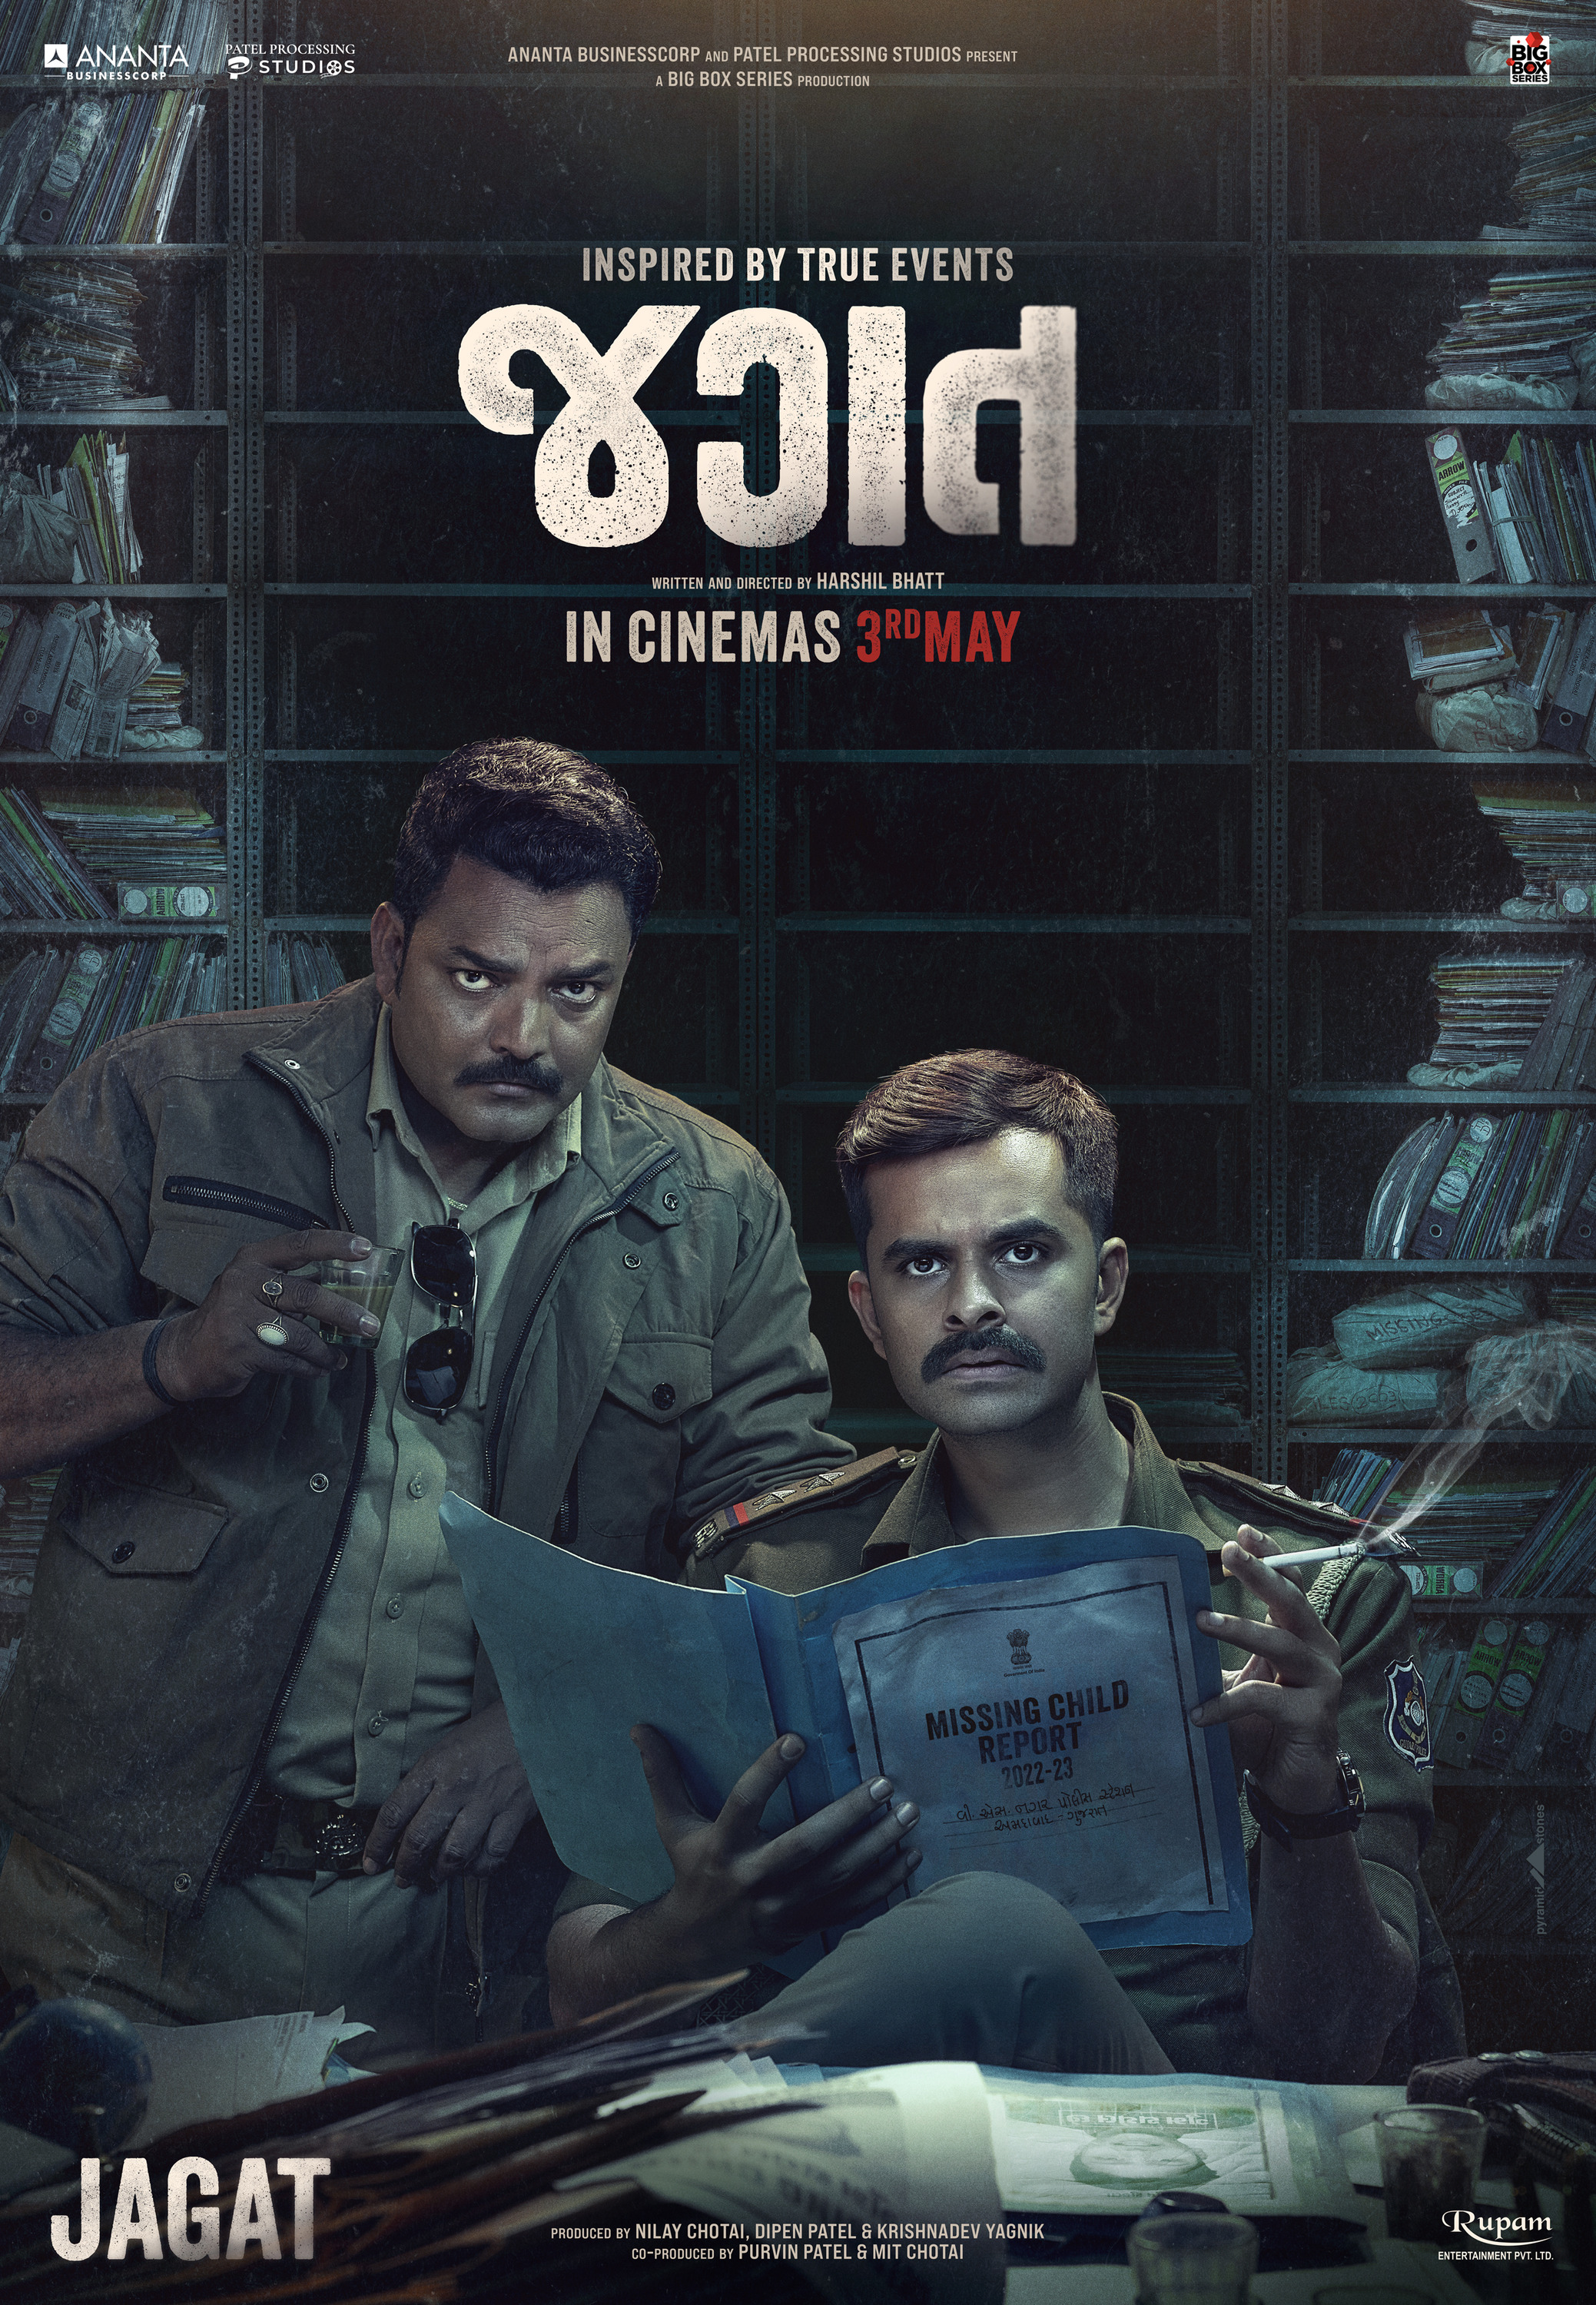 Mega Sized Movie Poster Image for Jagat (#2 of 6)